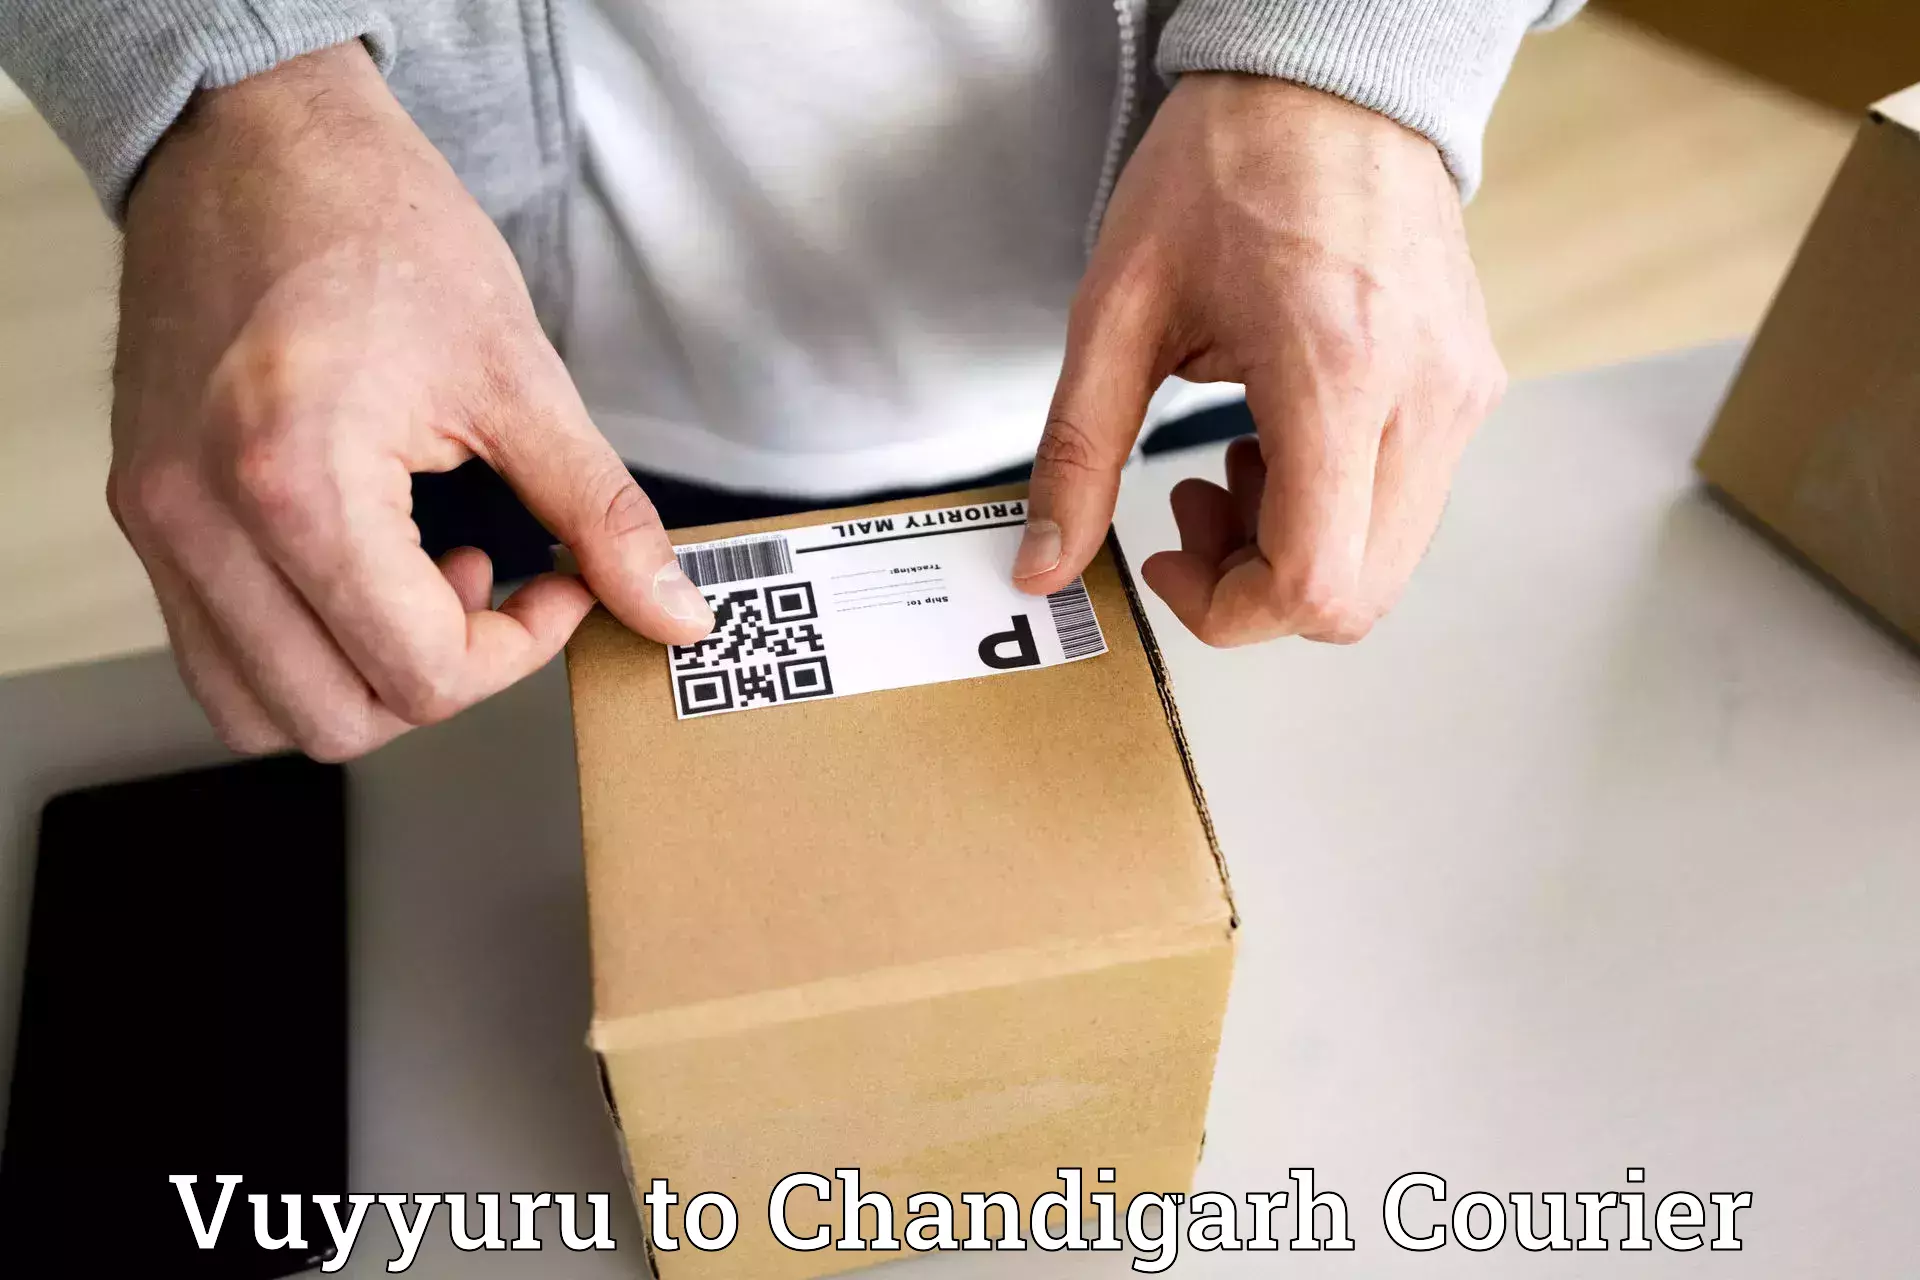 Express courier capabilities Vuyyuru to Chandigarh